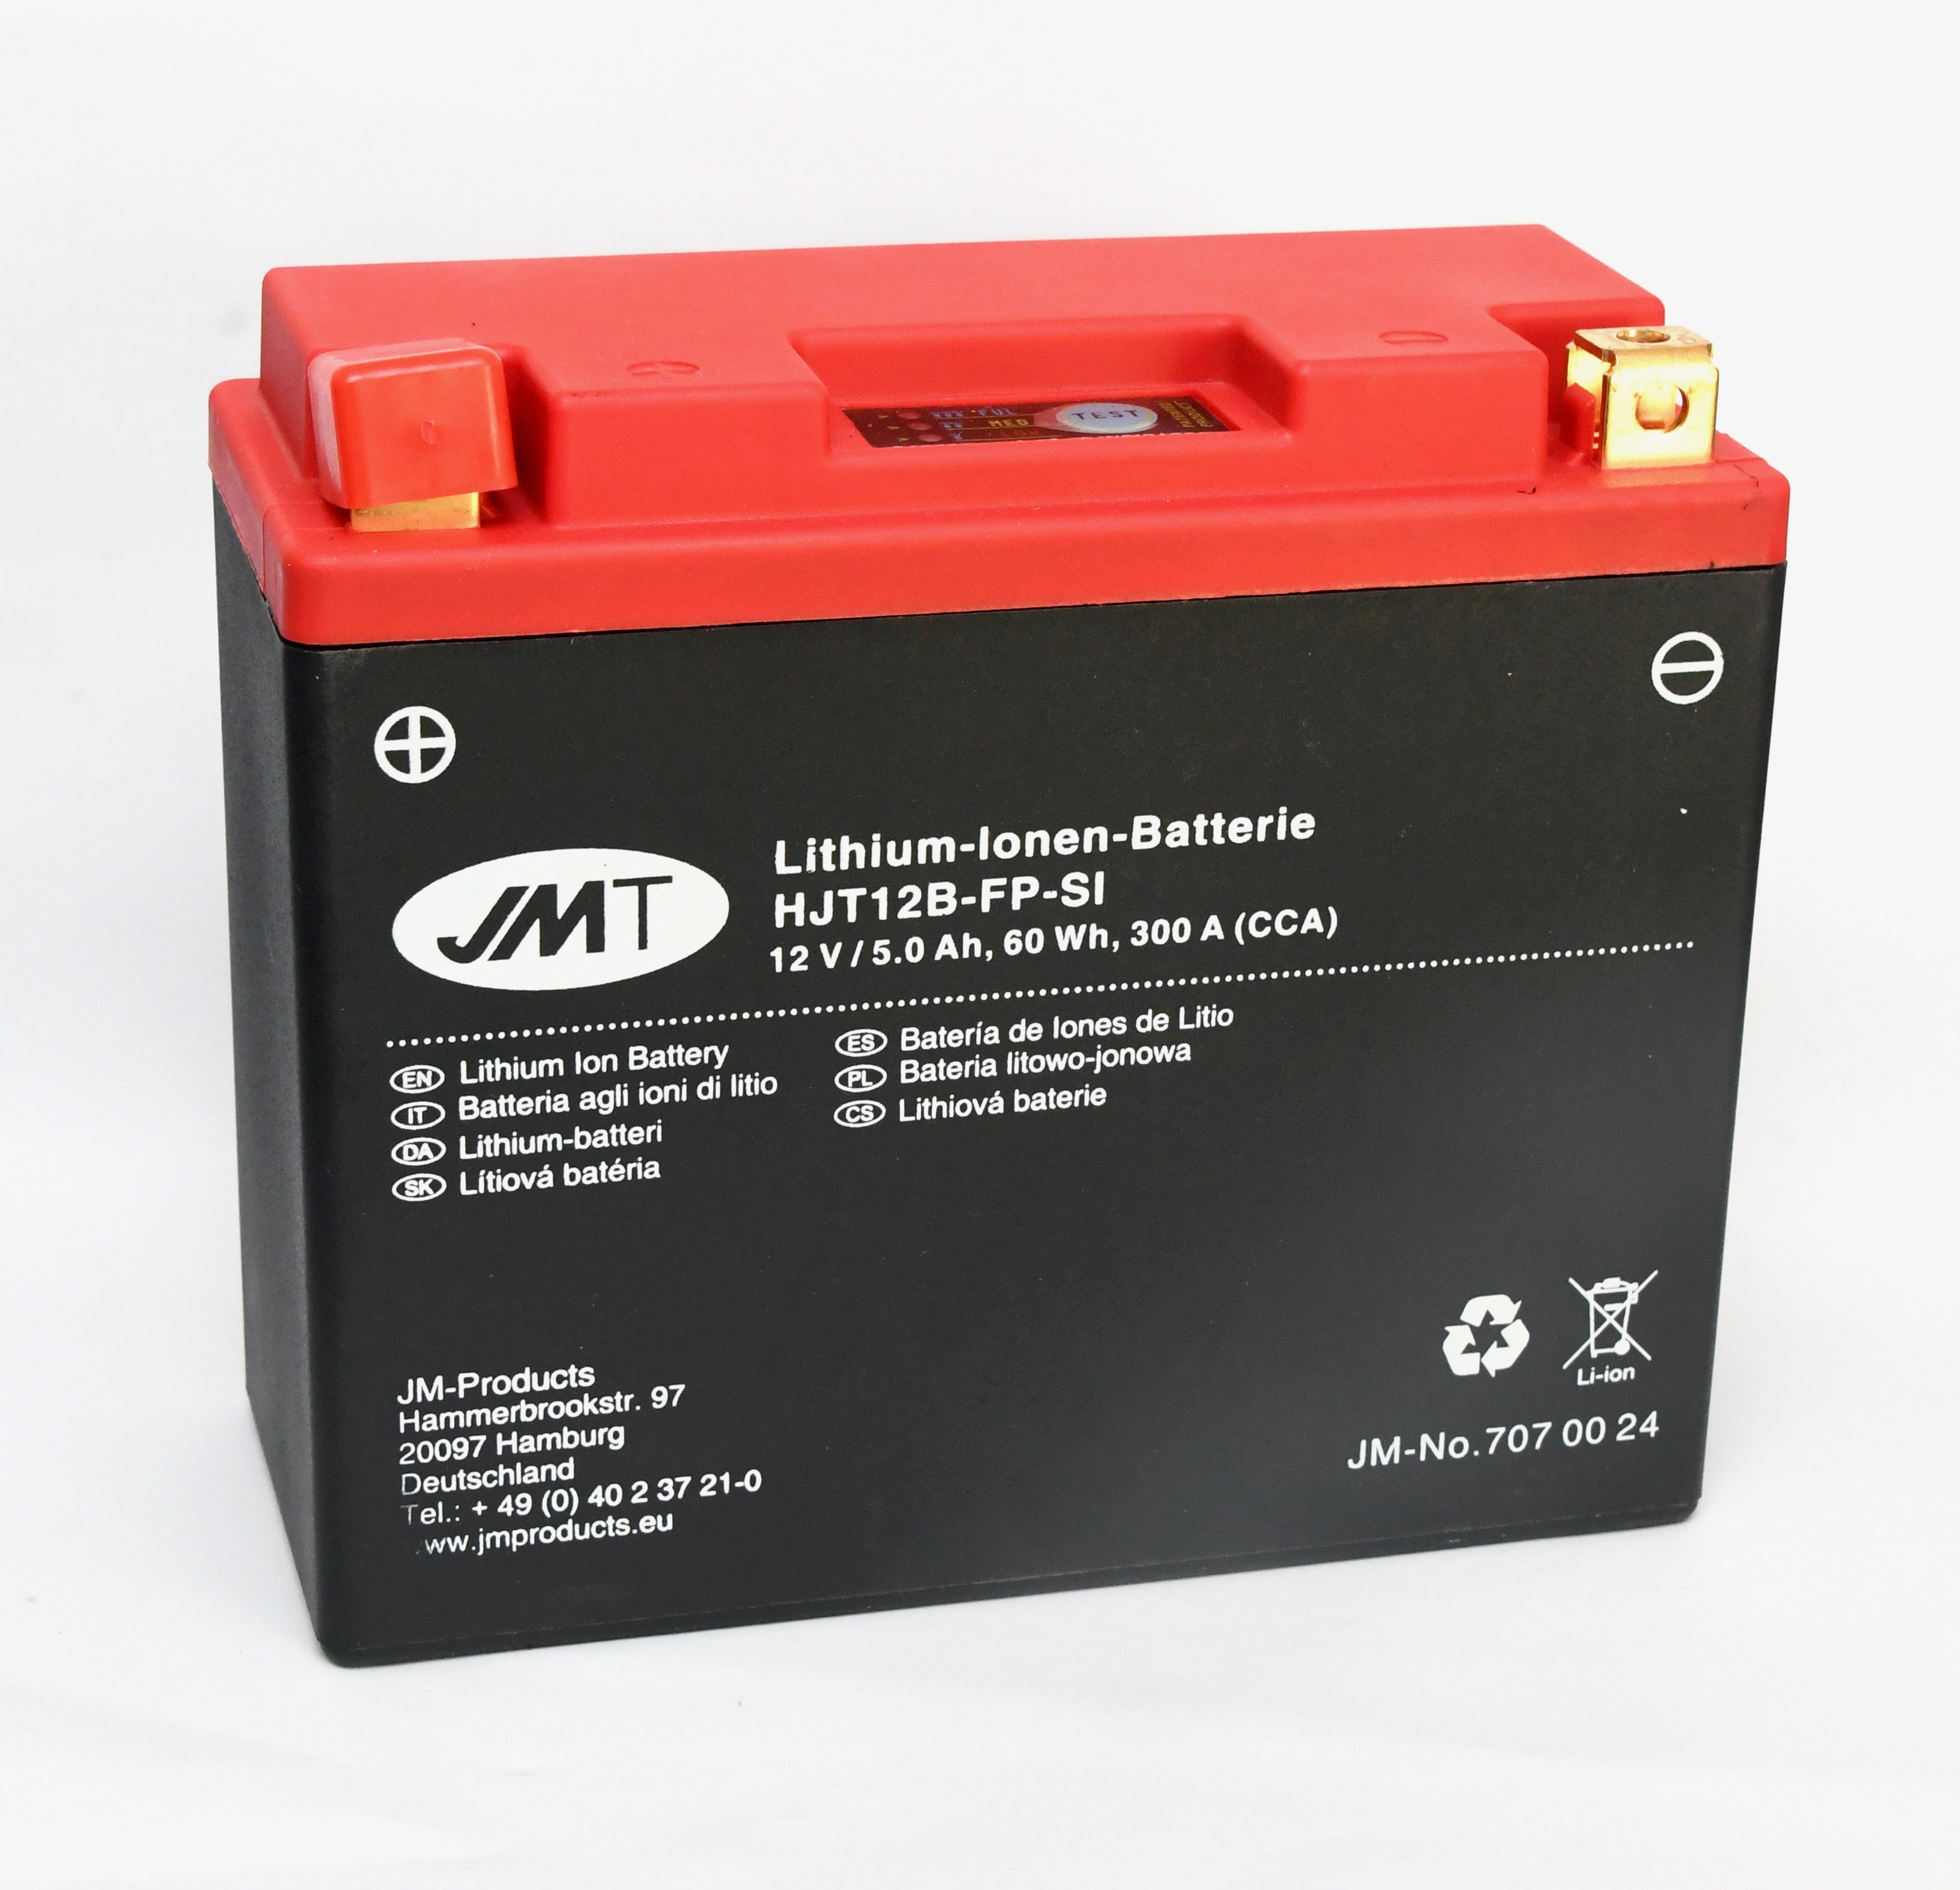 JMT Lithium Ion Battery HJT12B-FP-SI